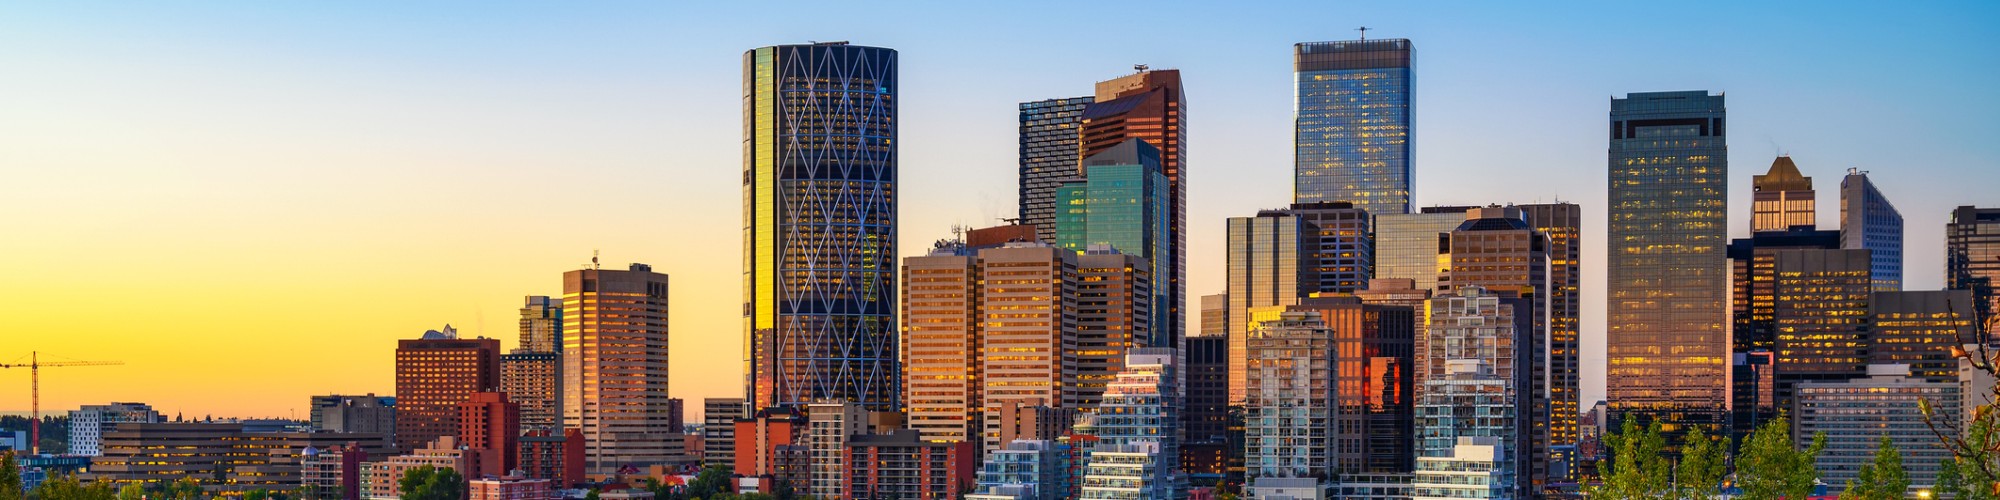 Depiction of Calgary, Alberta skyline